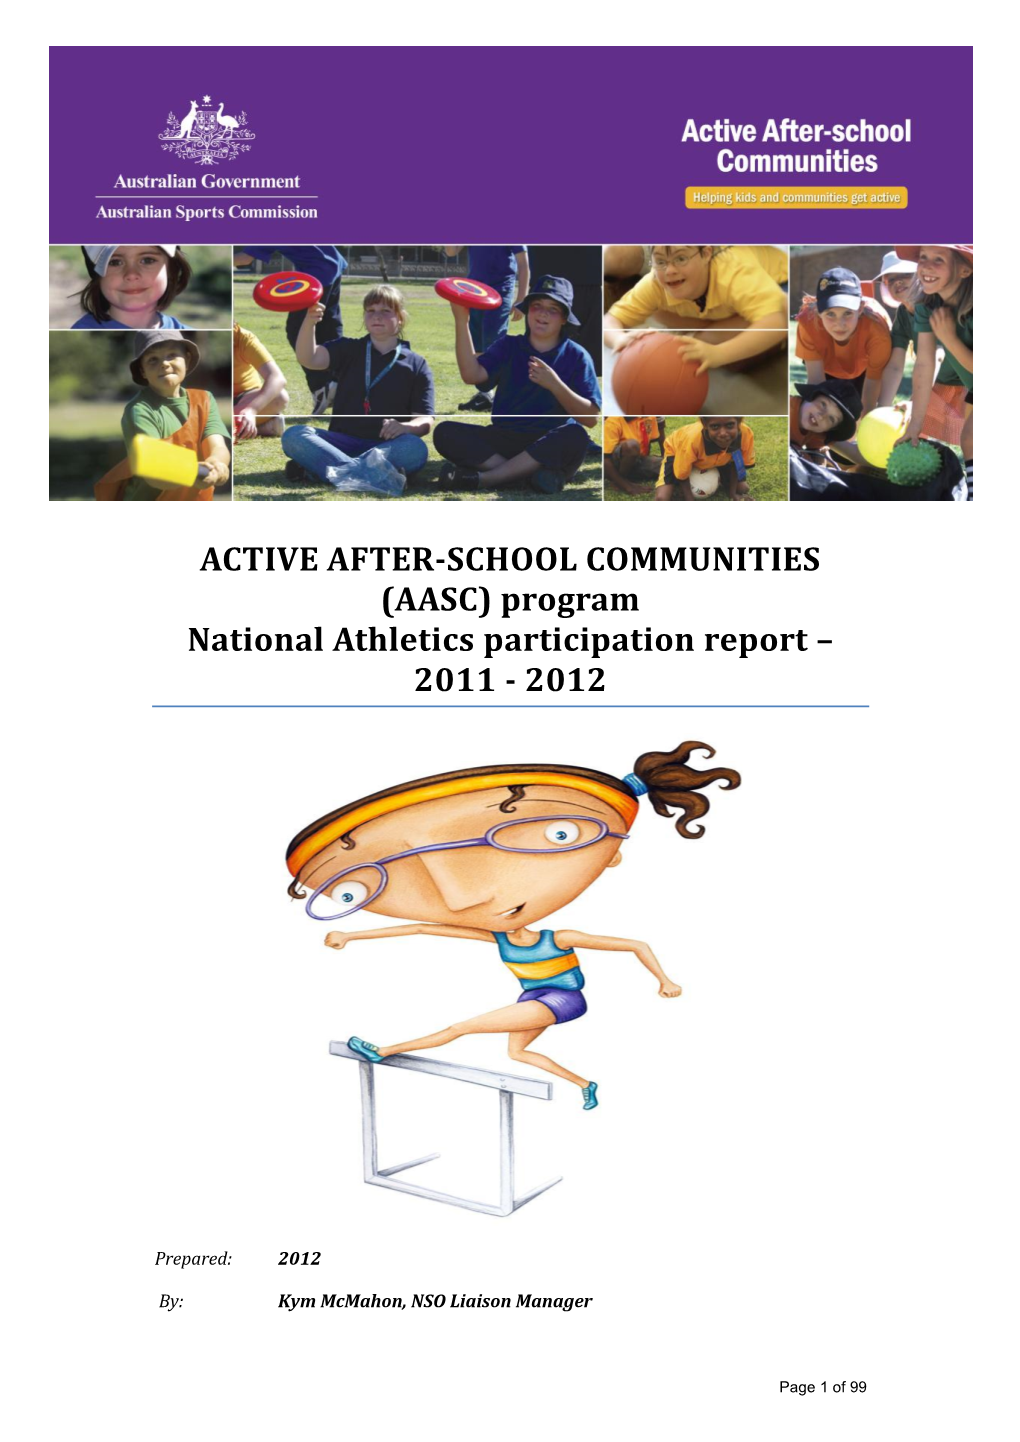 Active After-School Communites (AASC